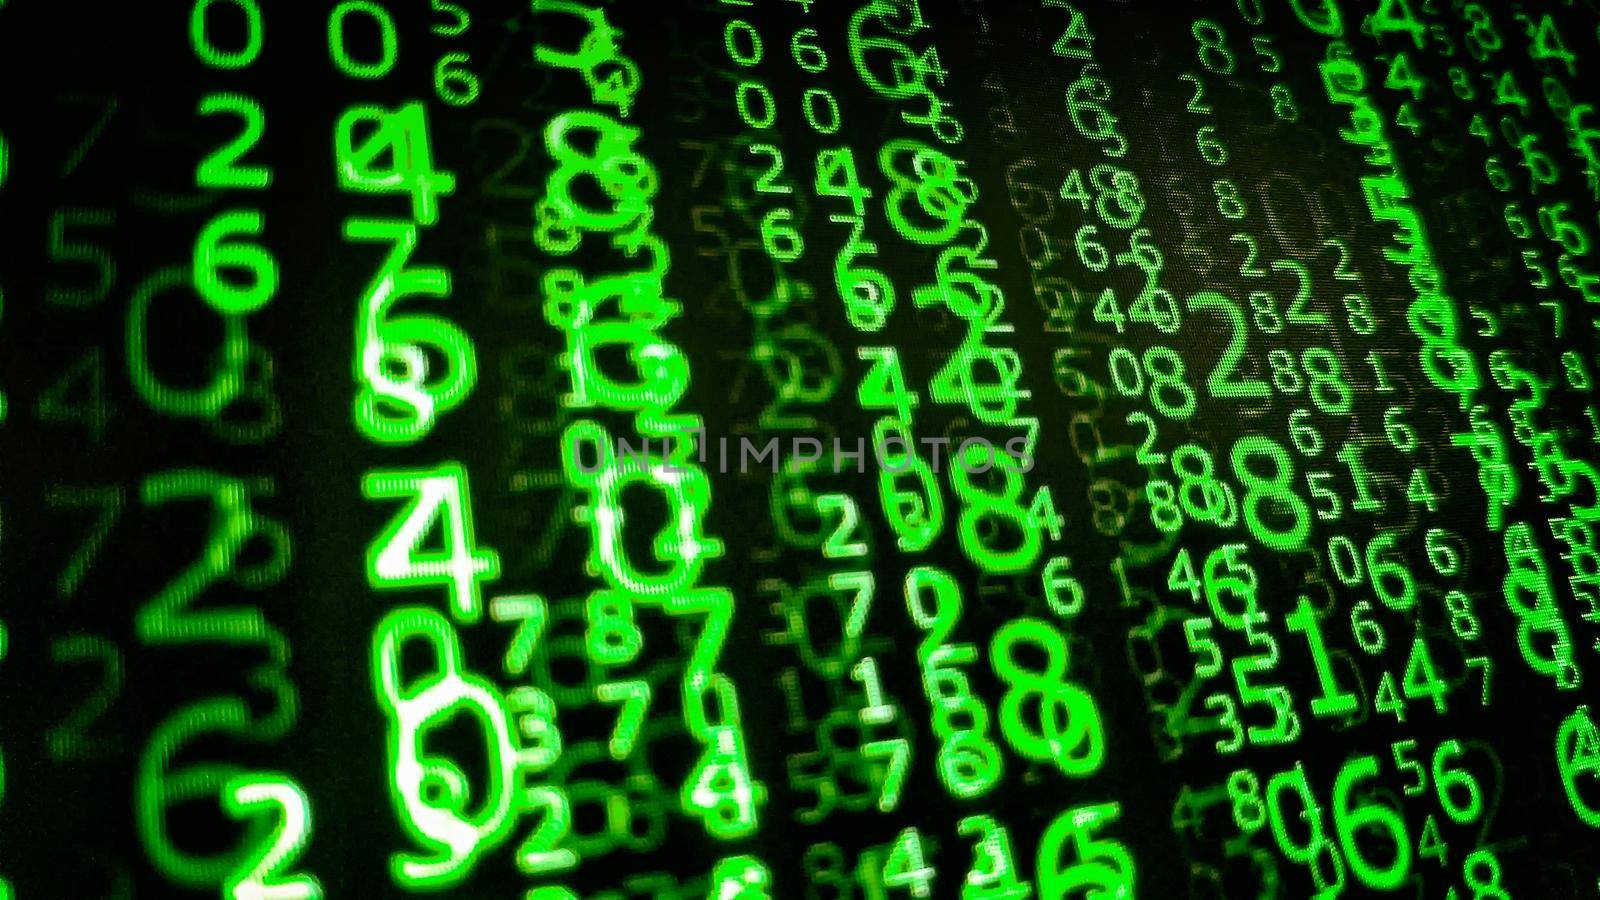 binary numbers on computer screen matrix background